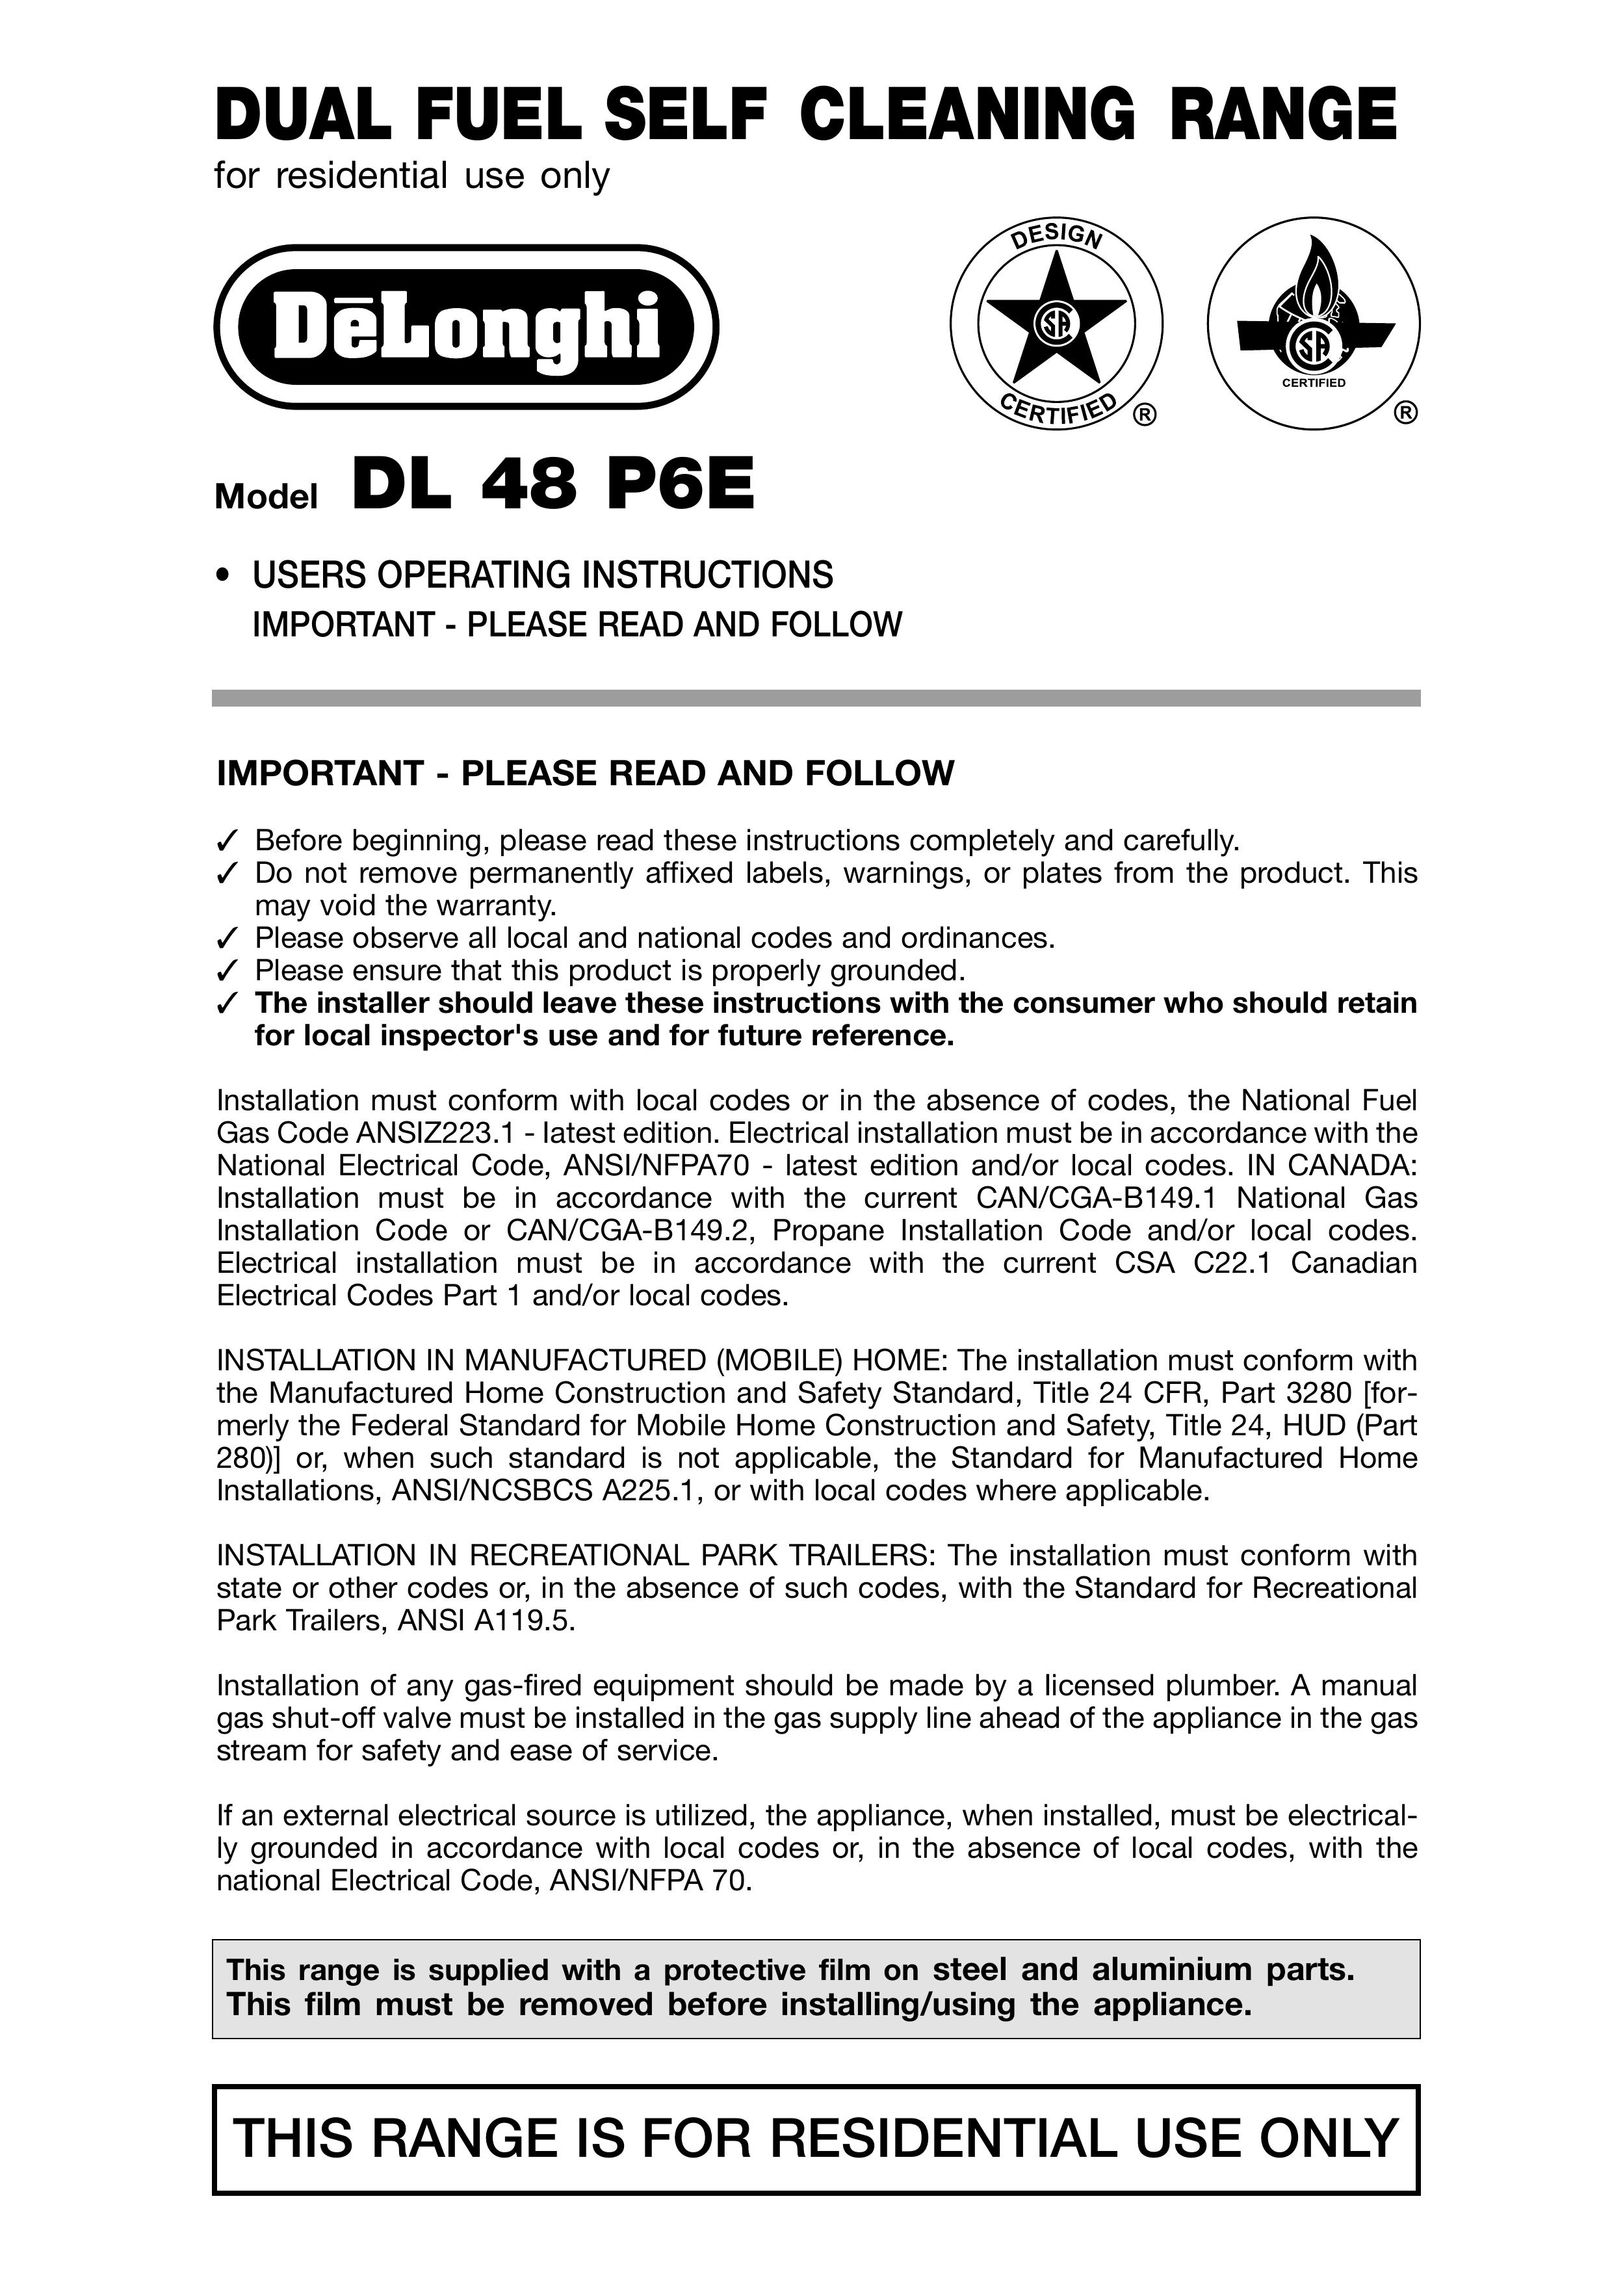 DeLonghi DL 48 P6E Range User Manual